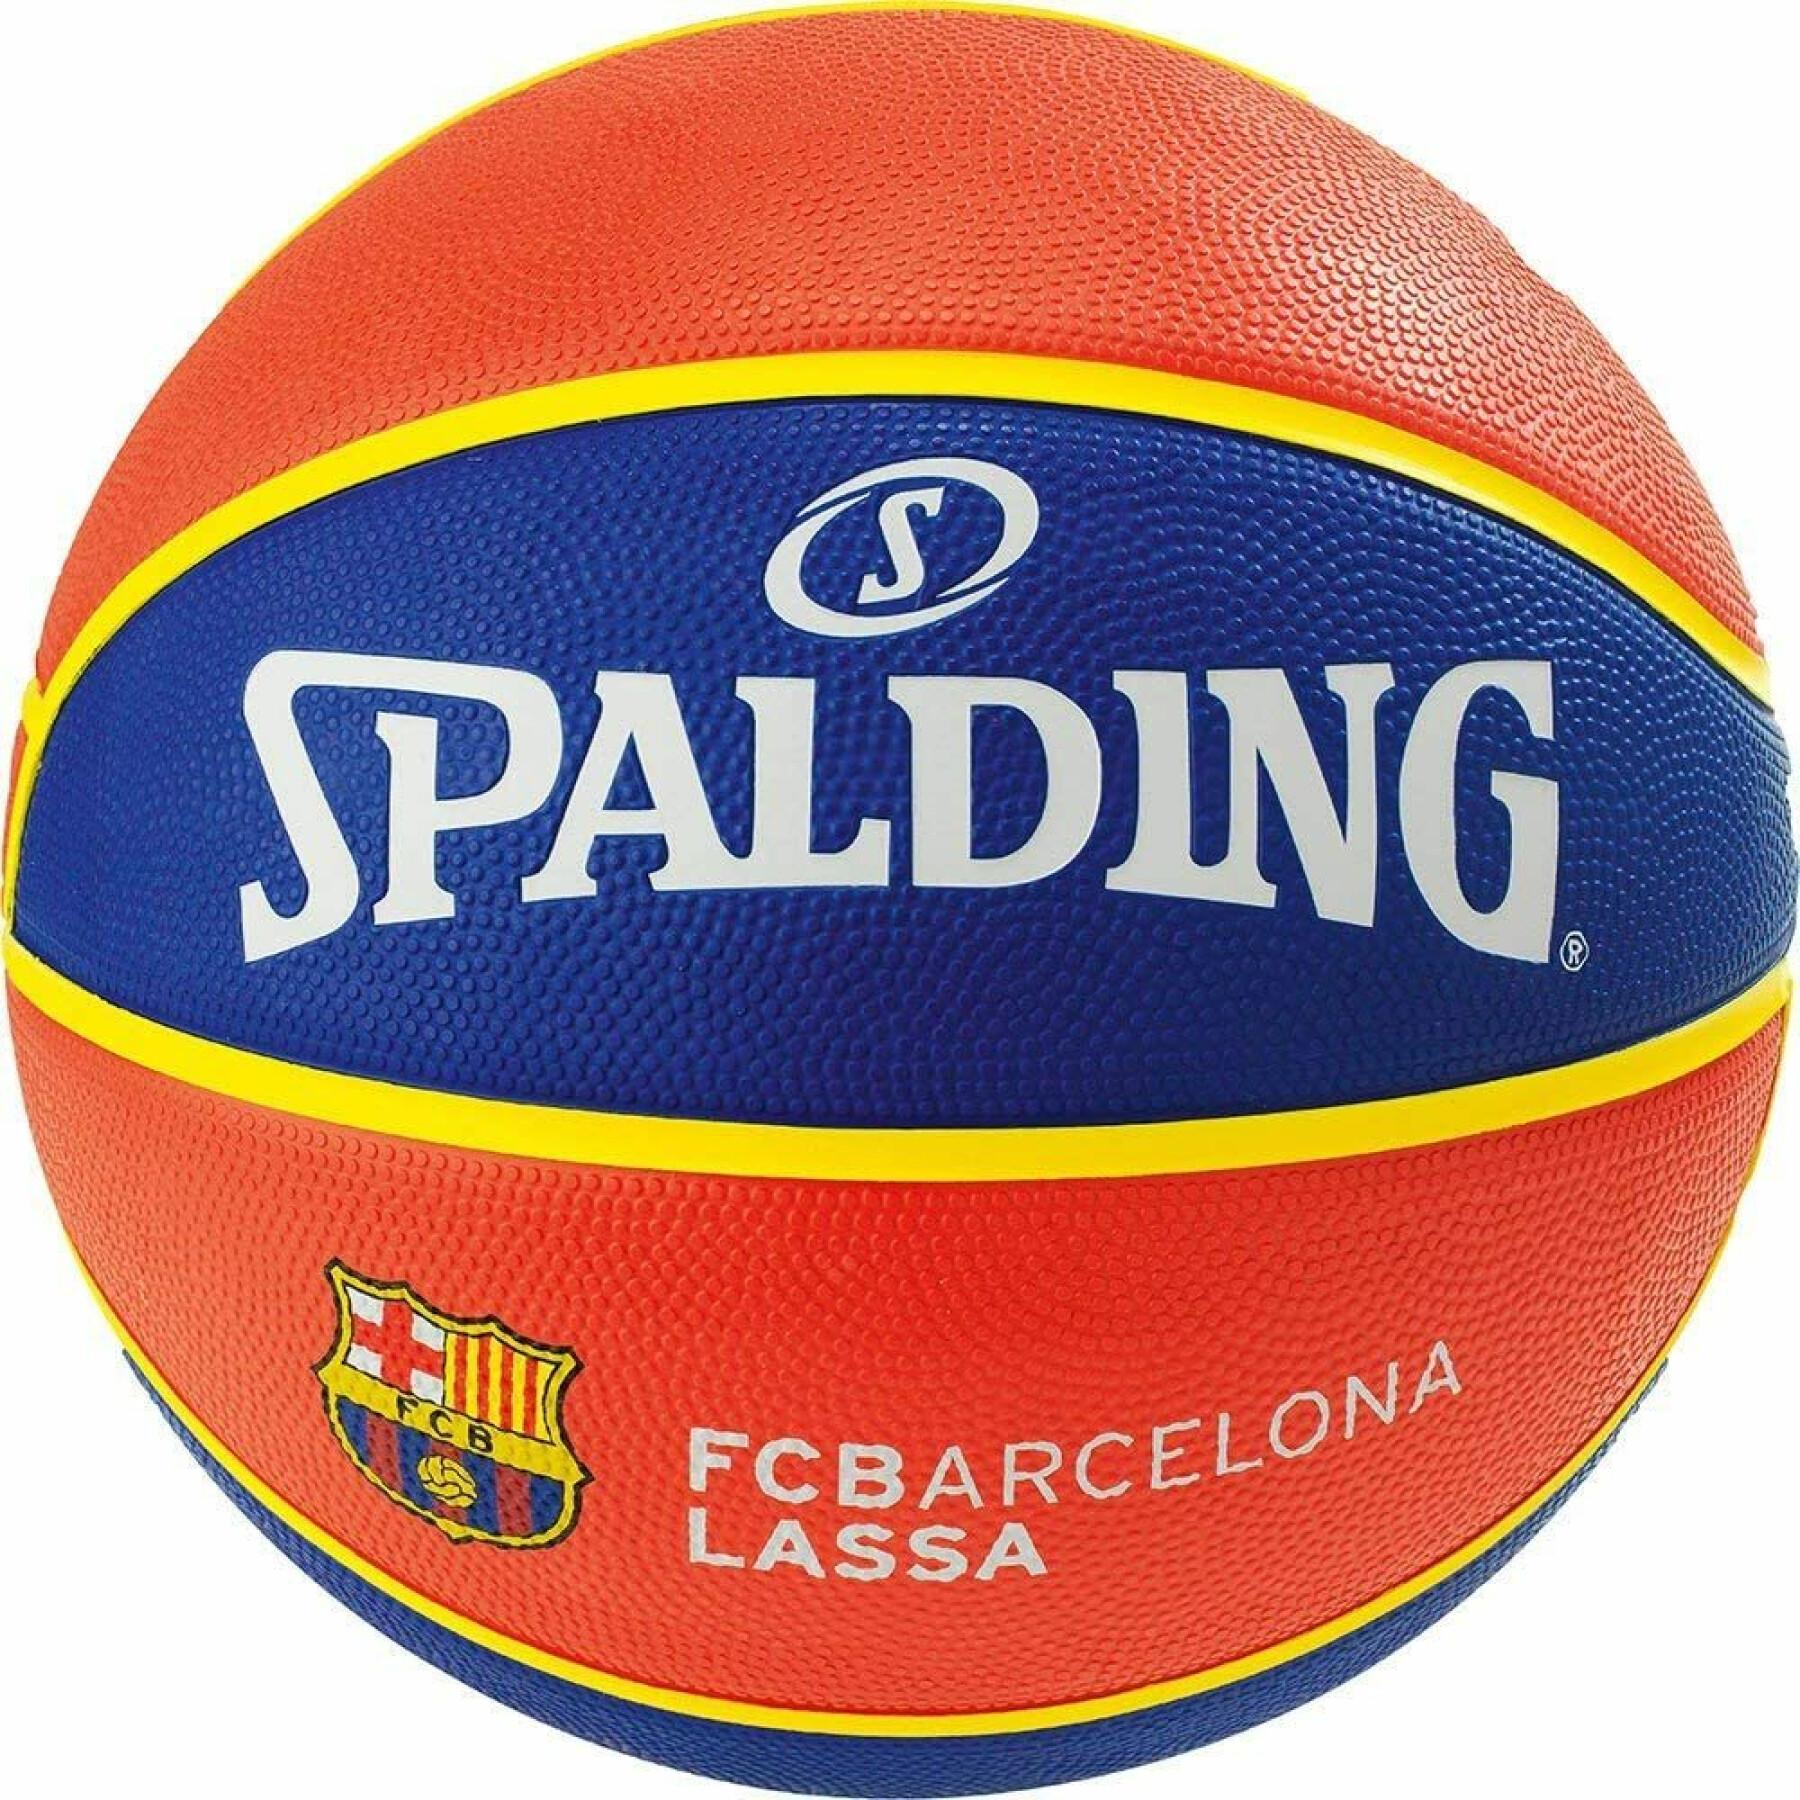 Ballong Spalding FC Barcelone Rubber EL TEAM 2018